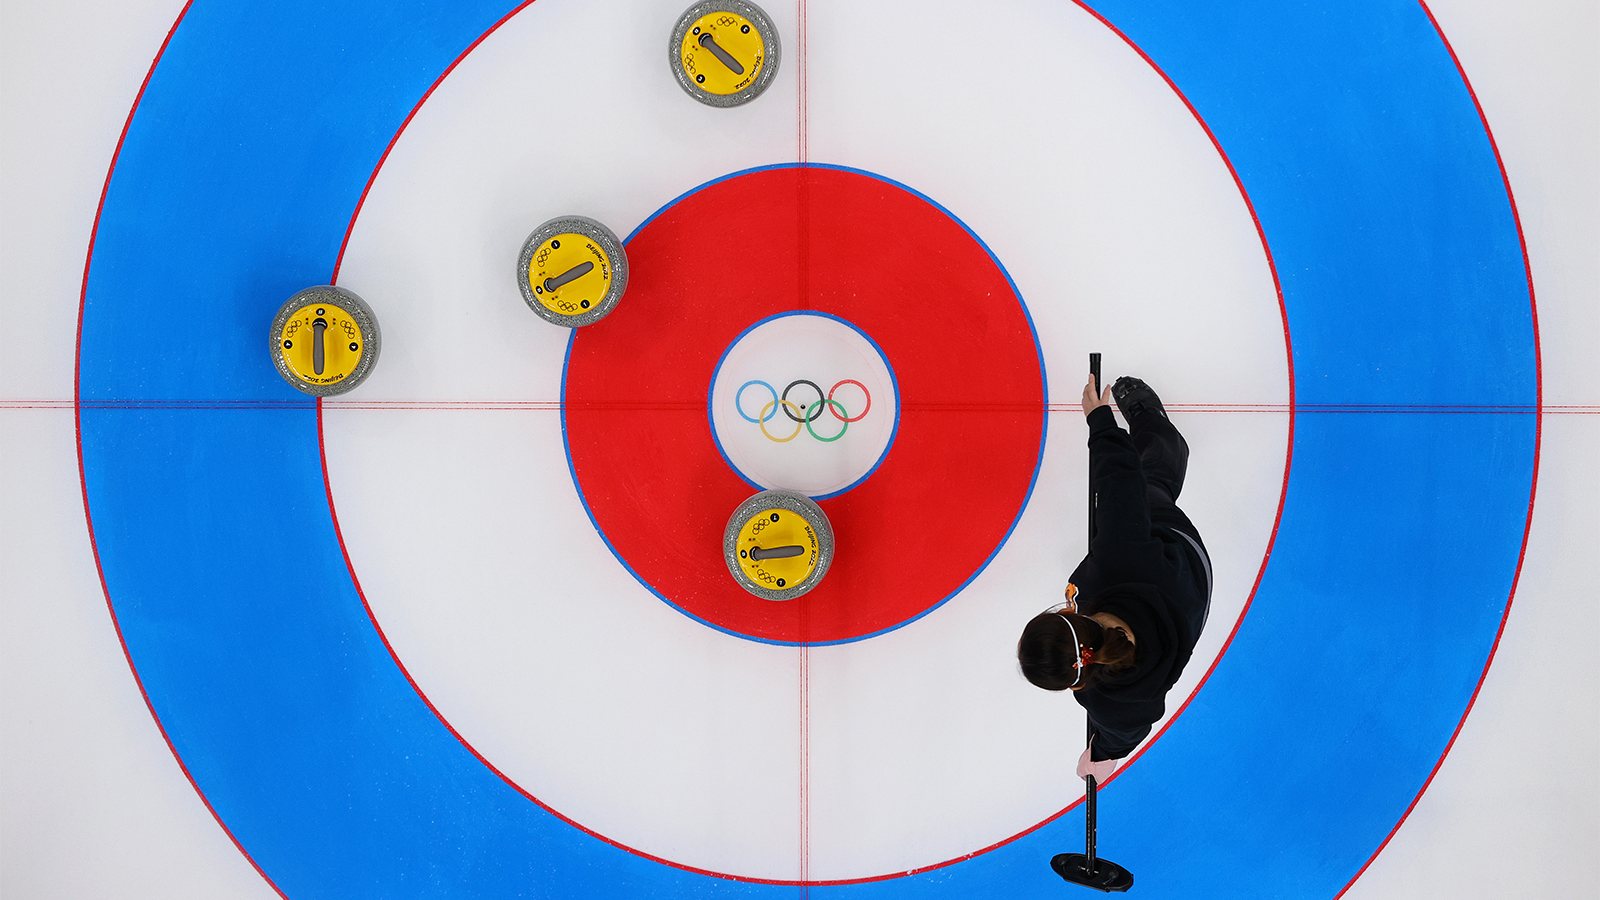 curling 2022 winter olympics